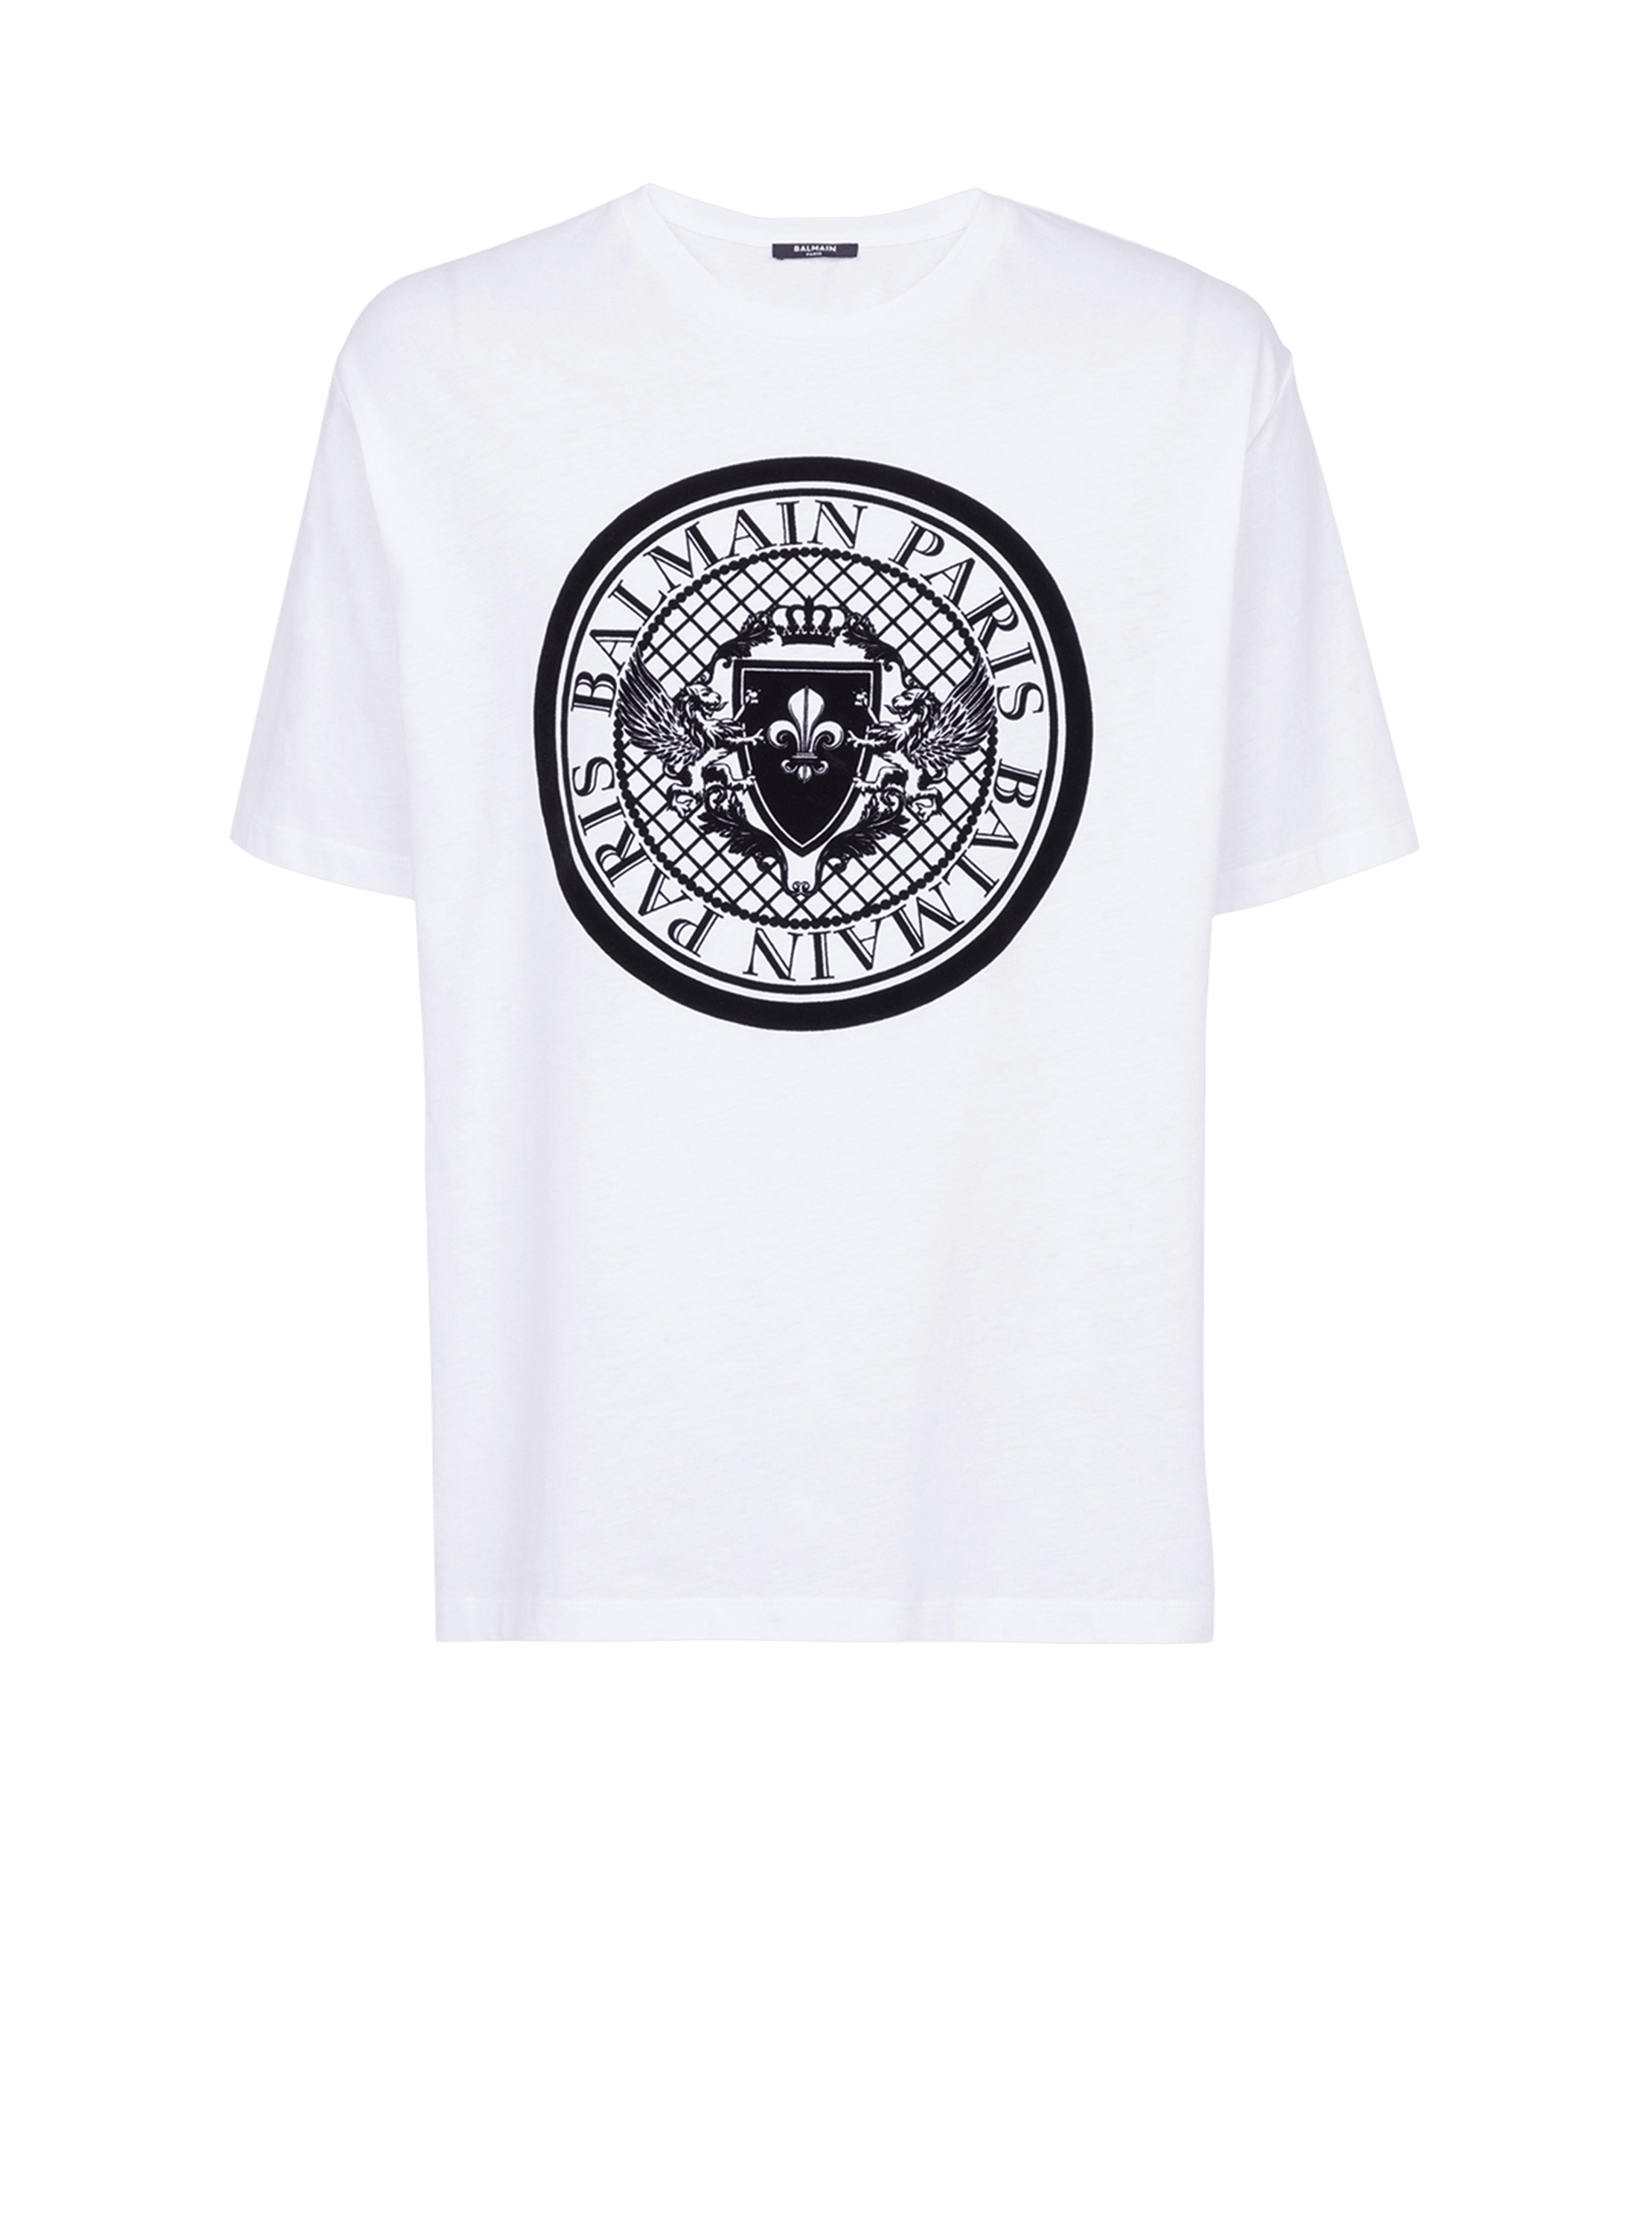 Balmain White Metallic T-Shirt